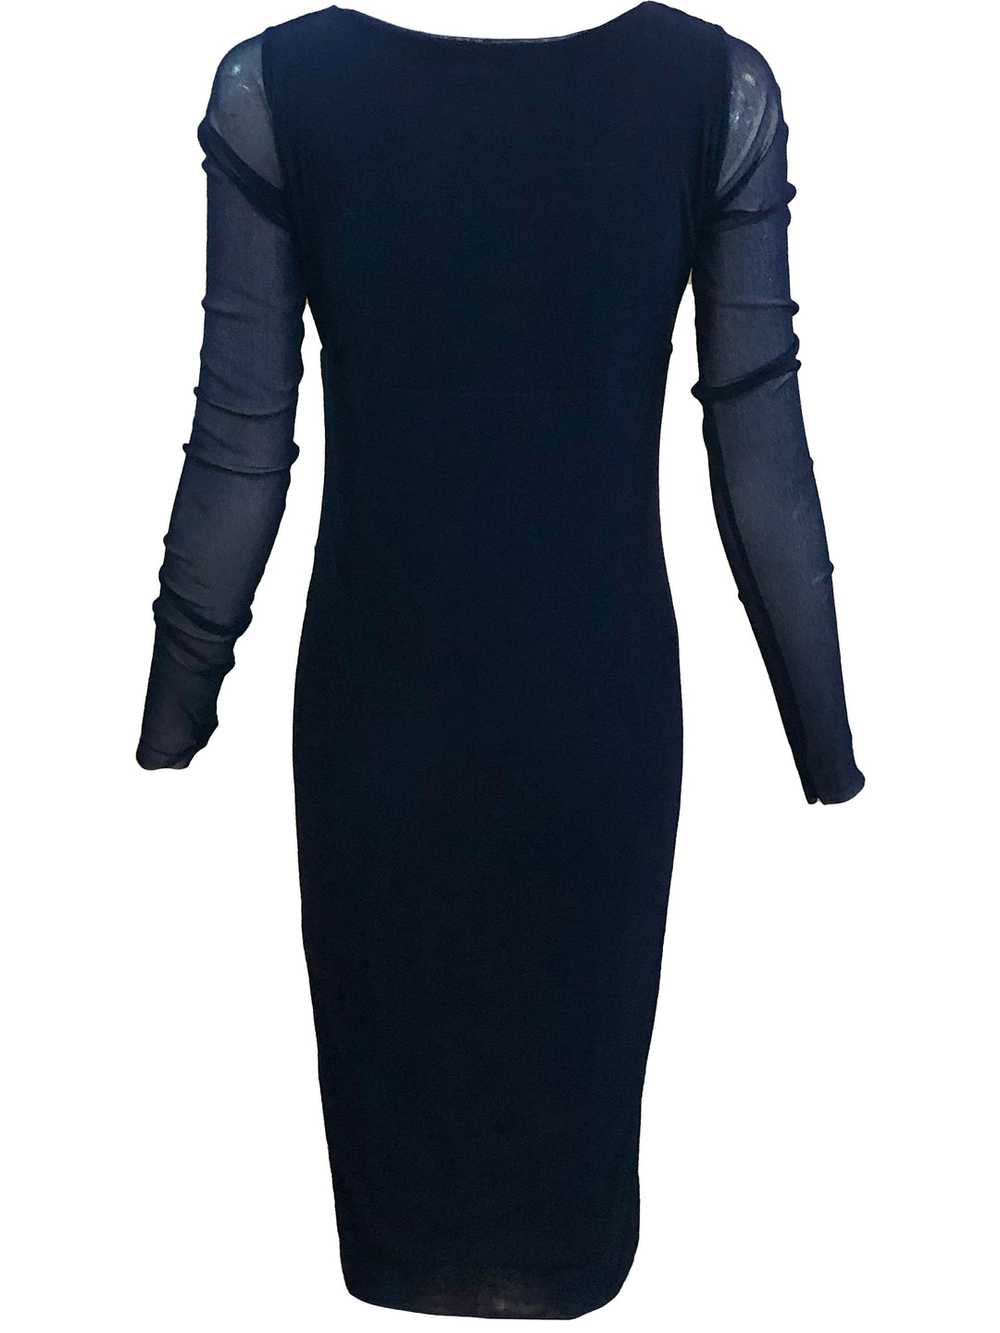 Fuzzi Contemporary Navy Blue Mesh Body Con Dress - image 3